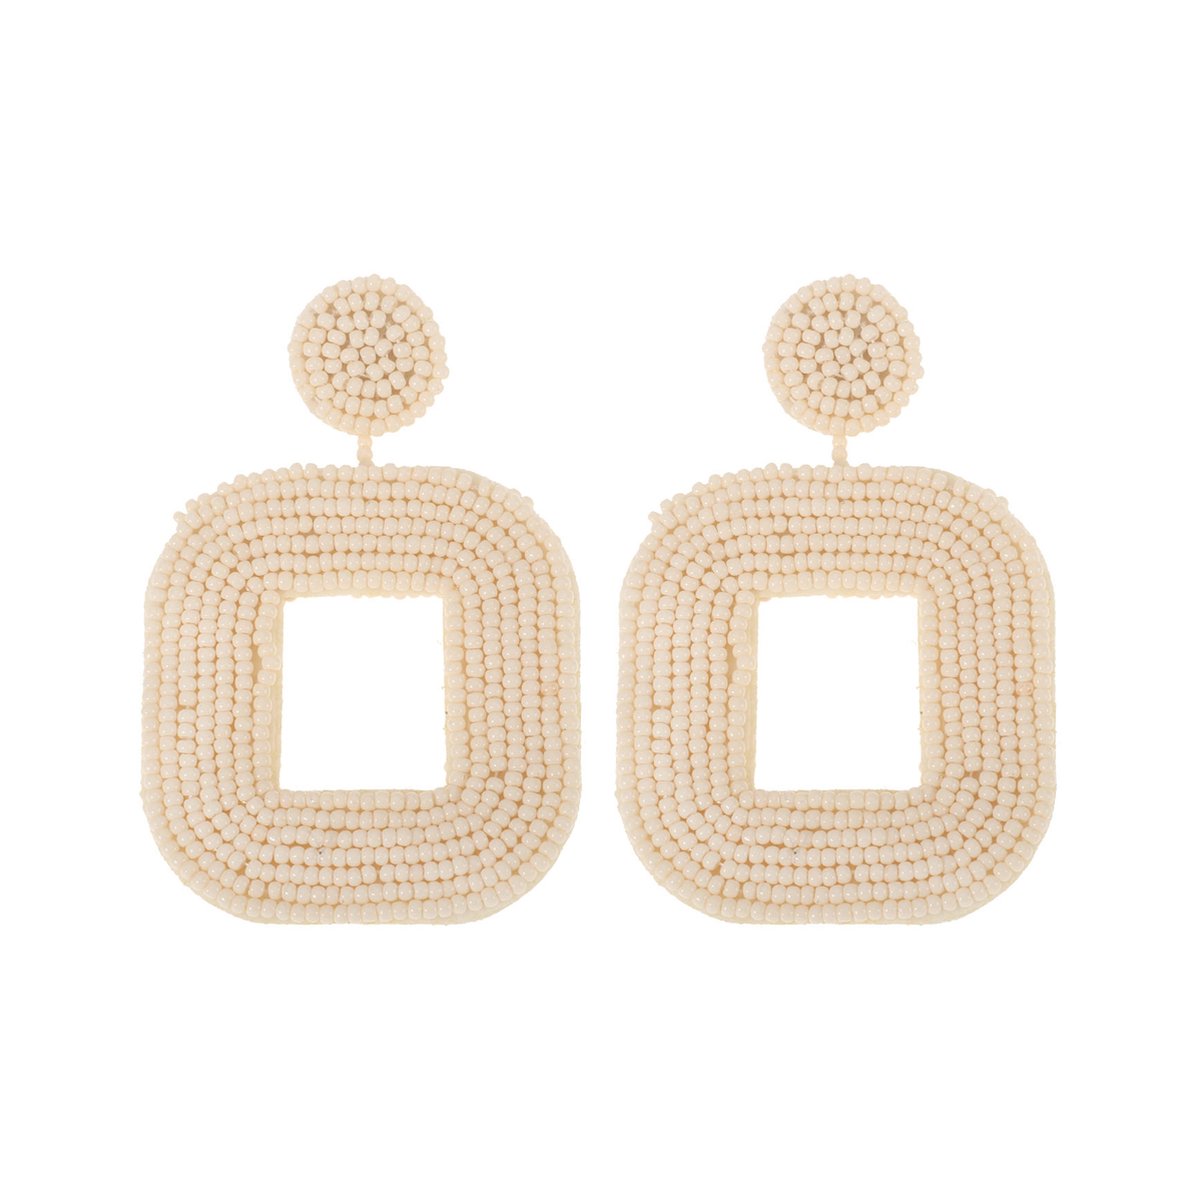 The Jewellery Club - Emma earrings beige - Oorbellen - Dames oorbellen - Kralen oorbellen - Beige - 4,5 cm - The Jewellery Club